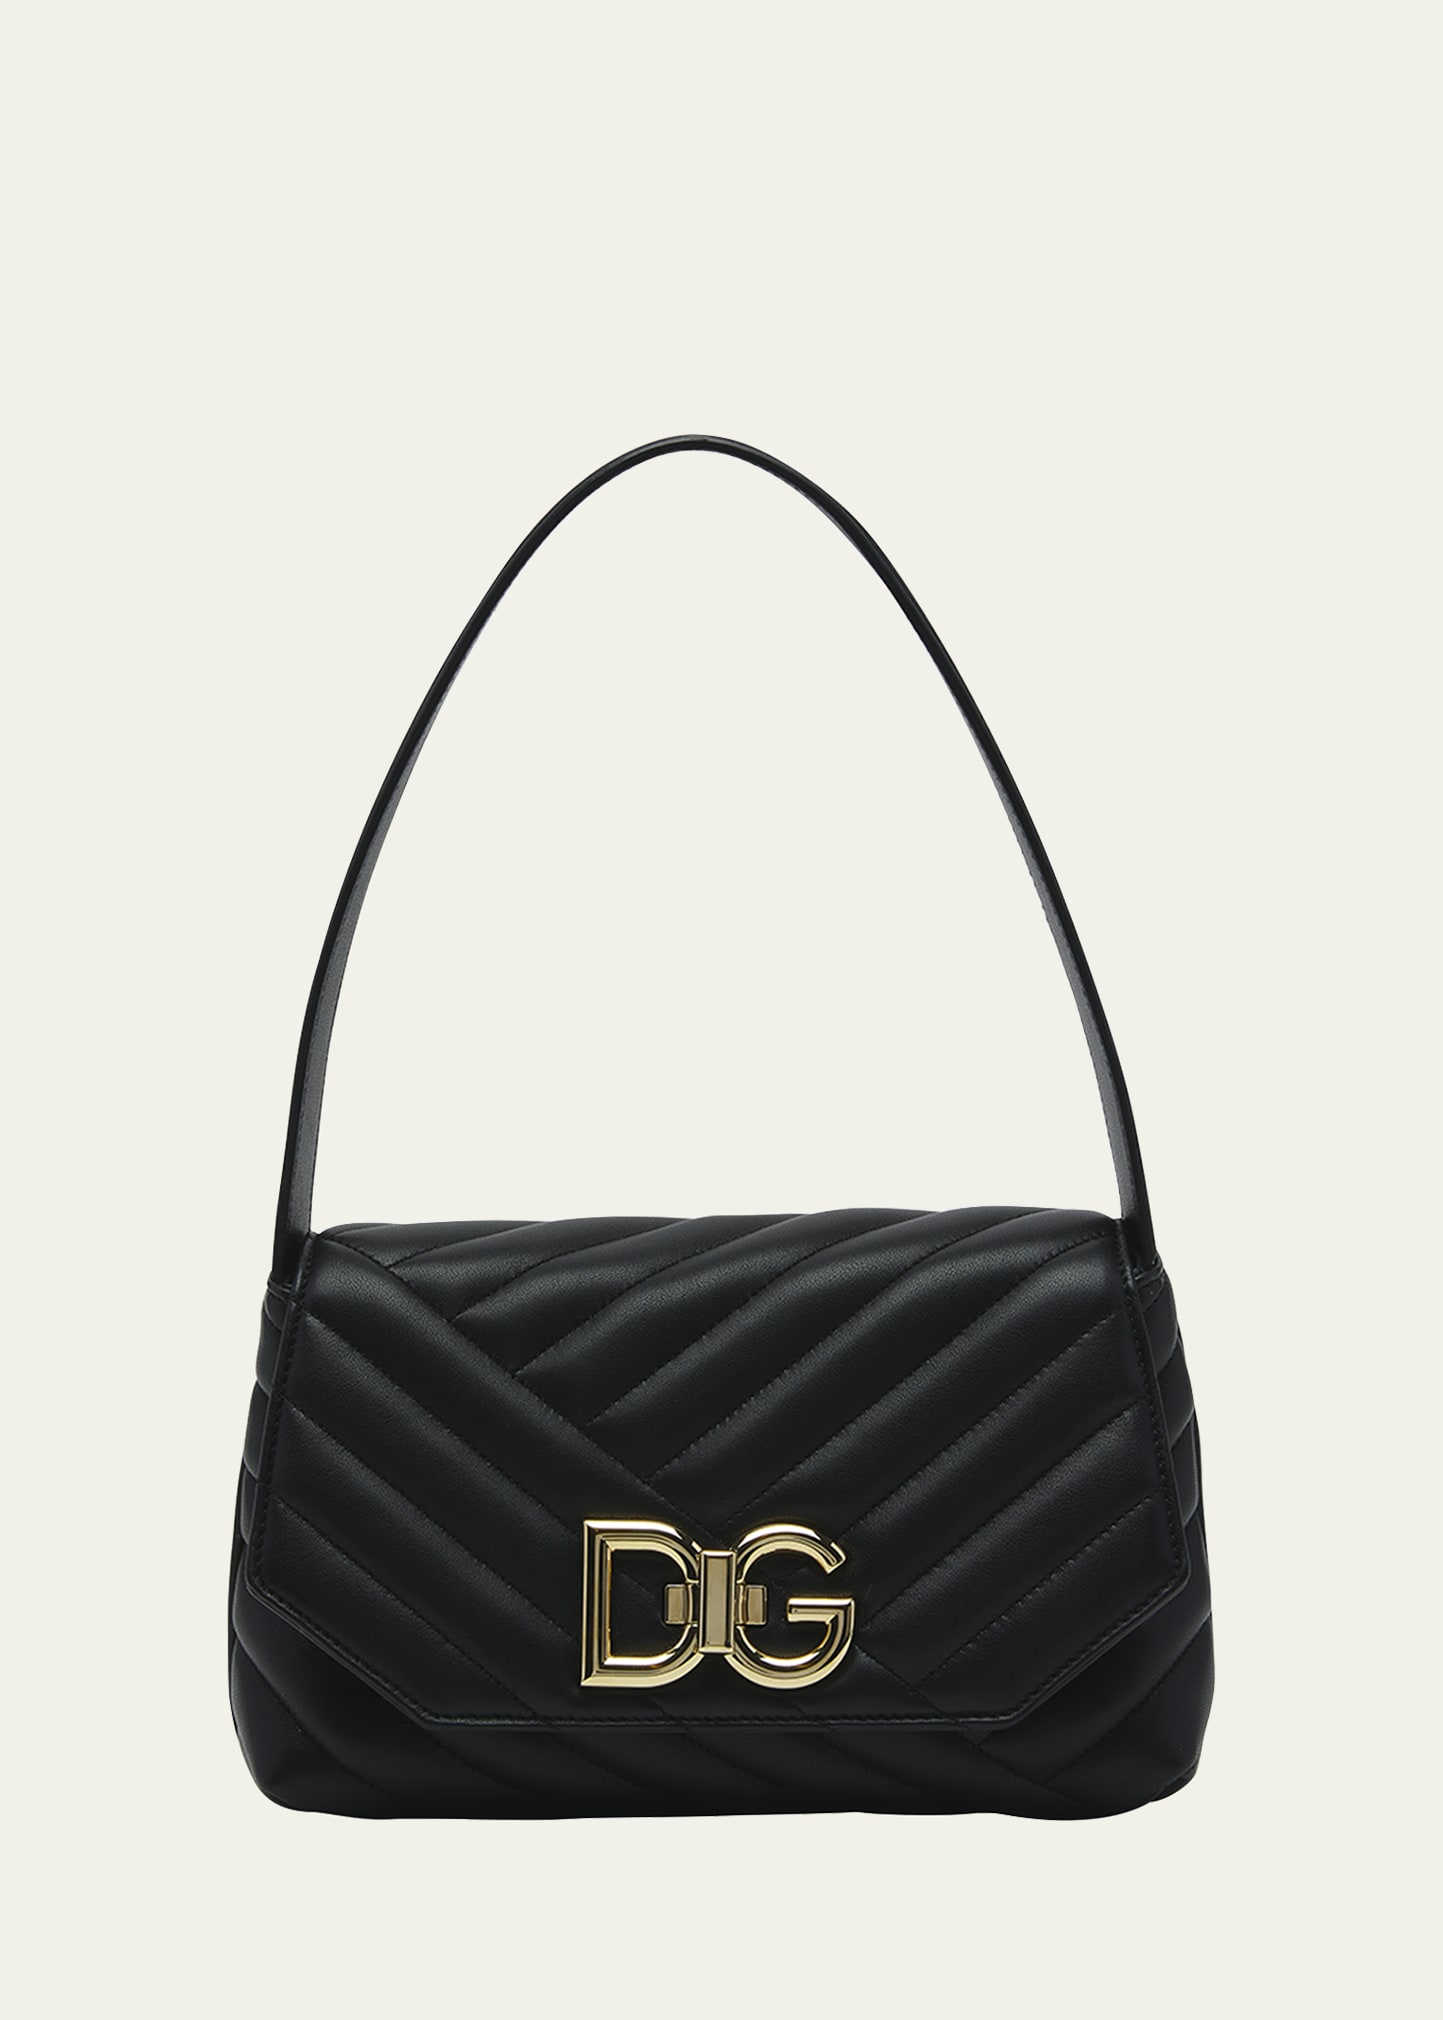 Dolce & Gabbana DG Logo Flap Leather Crossbody Bag in Medium Red